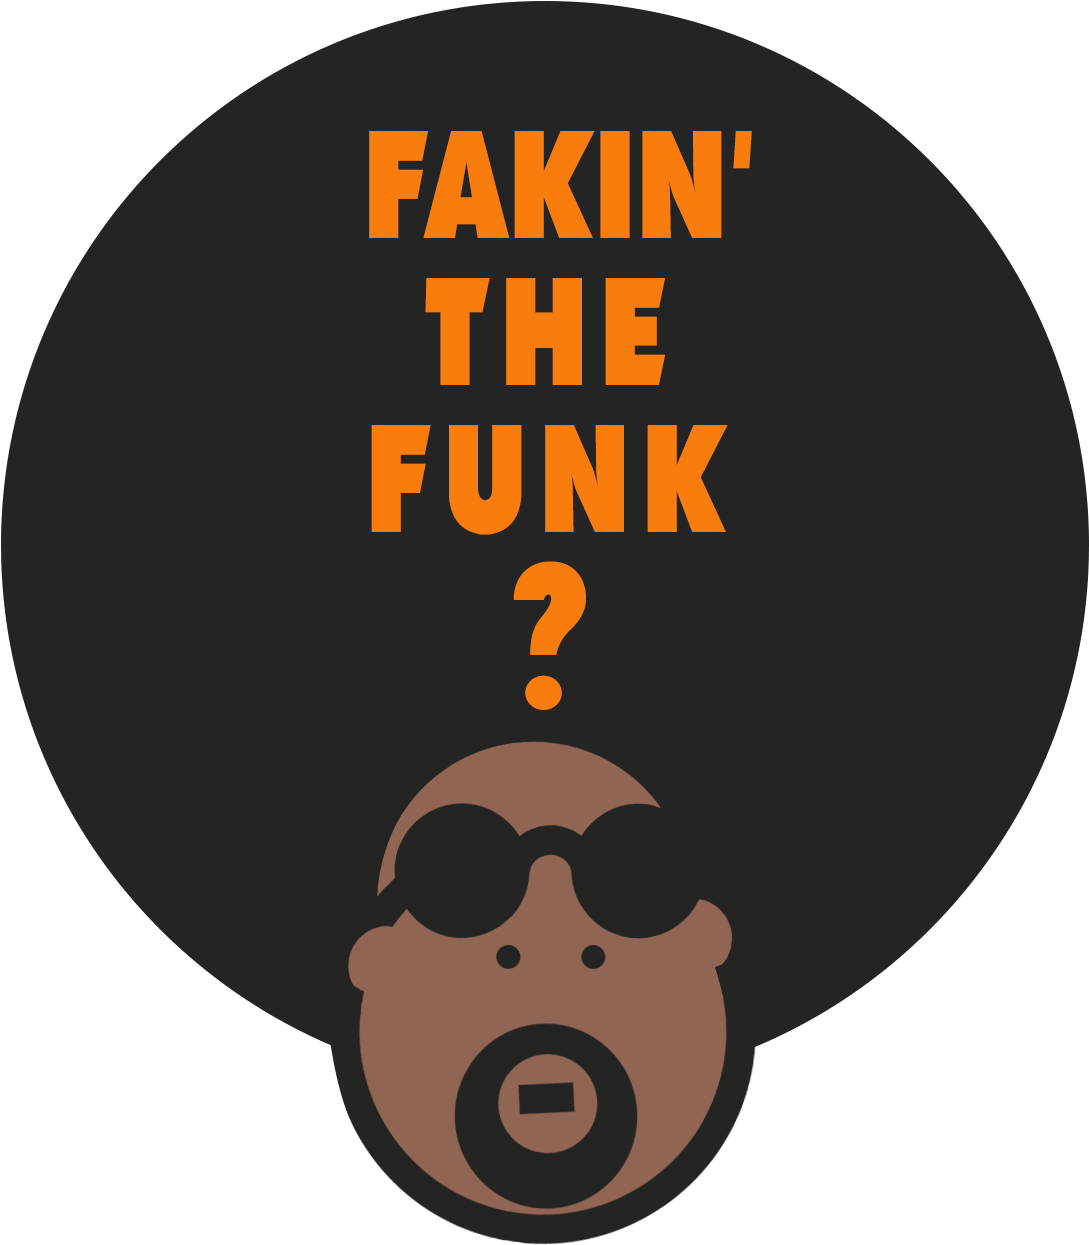 Fakin' The Funk - Poster (1250x1250)